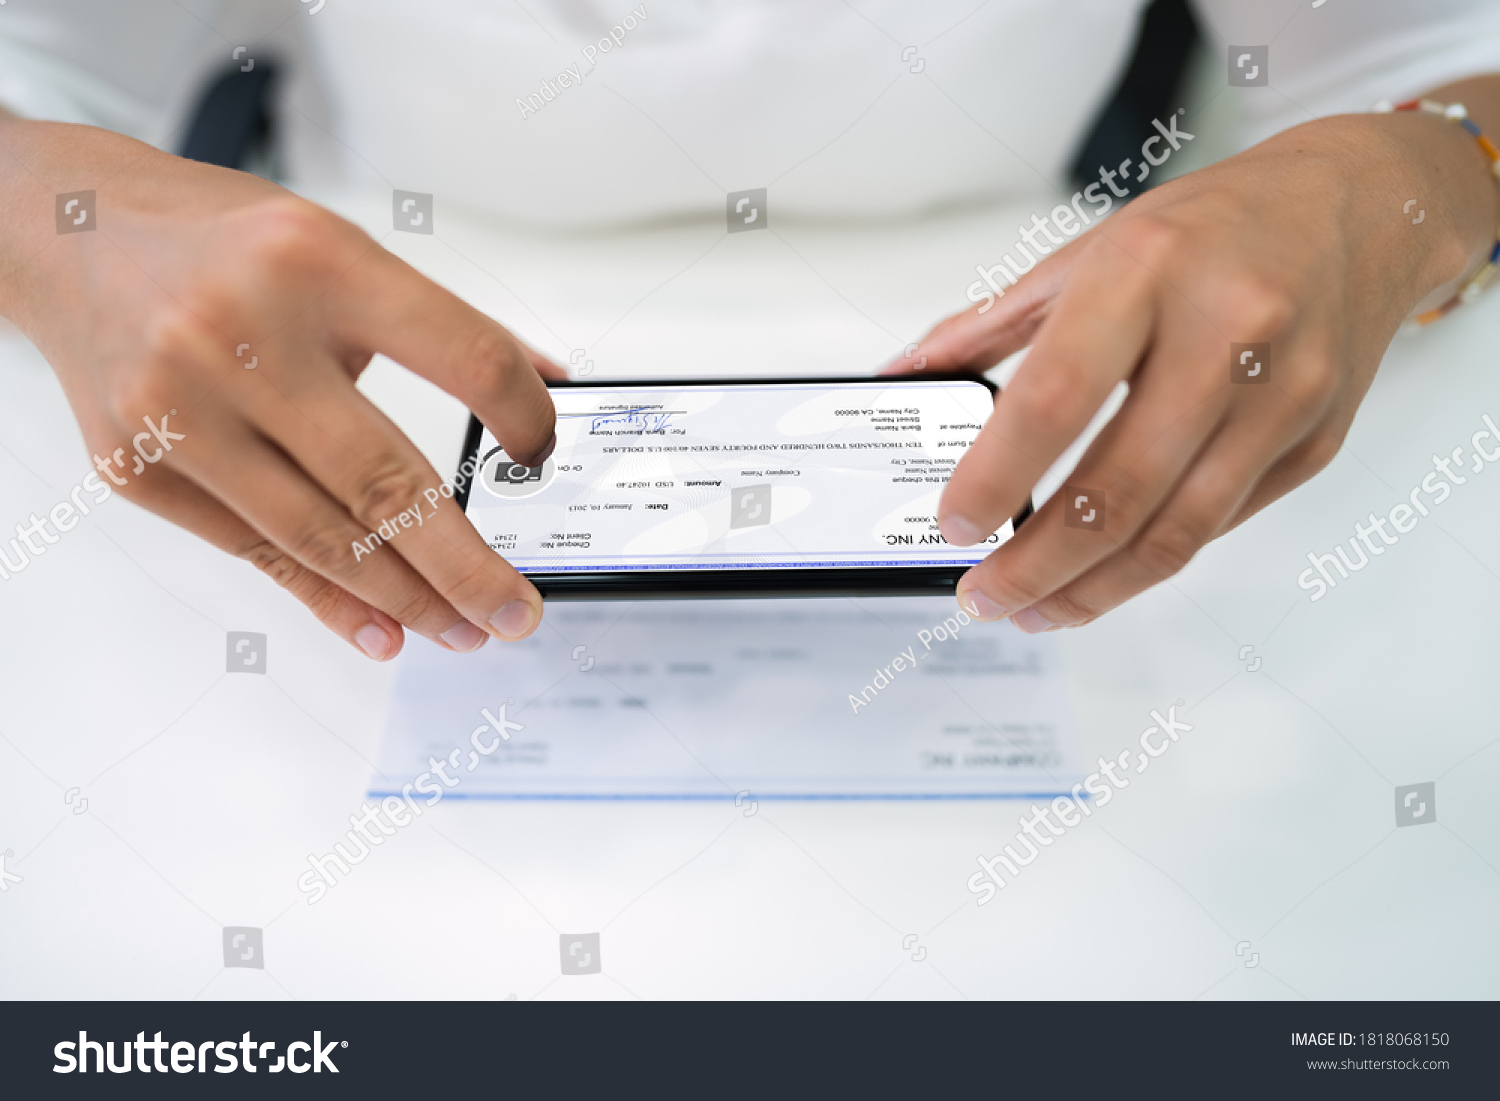 Remote Check Deposit Using Phone. Taking Document Photo #1818068150